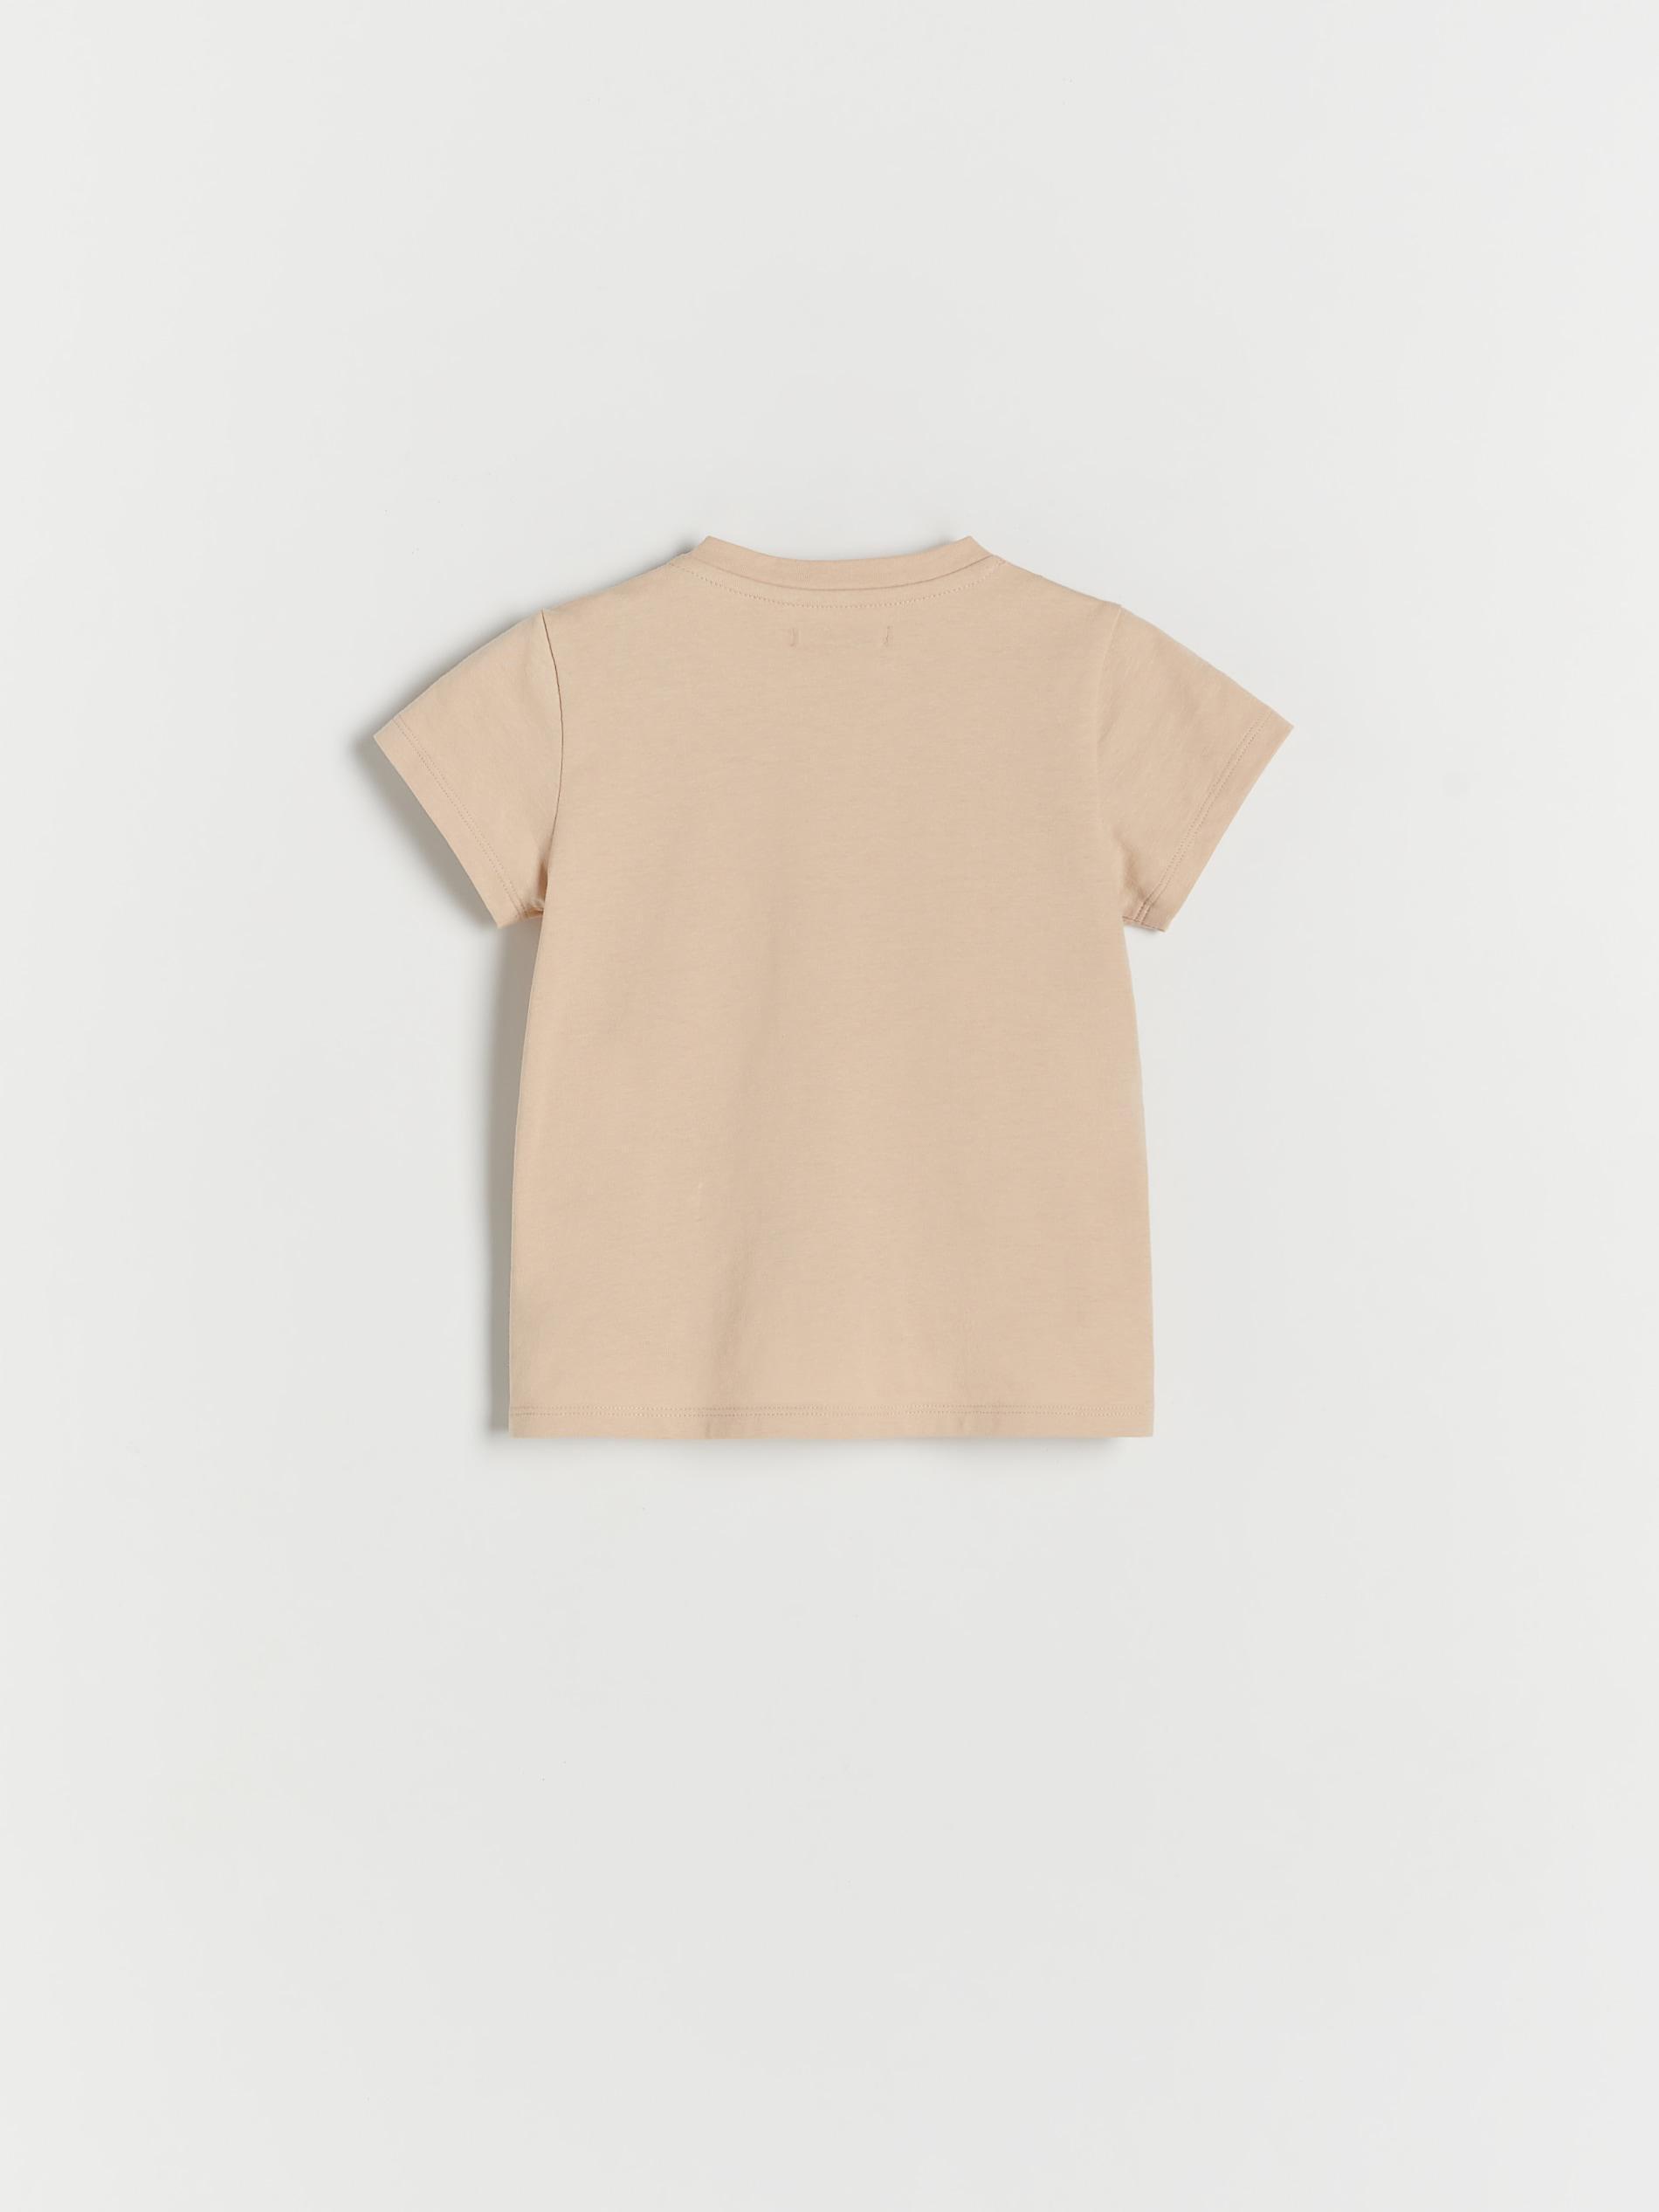 Reserved - Beige Printed T-Shirt, Kids Girls